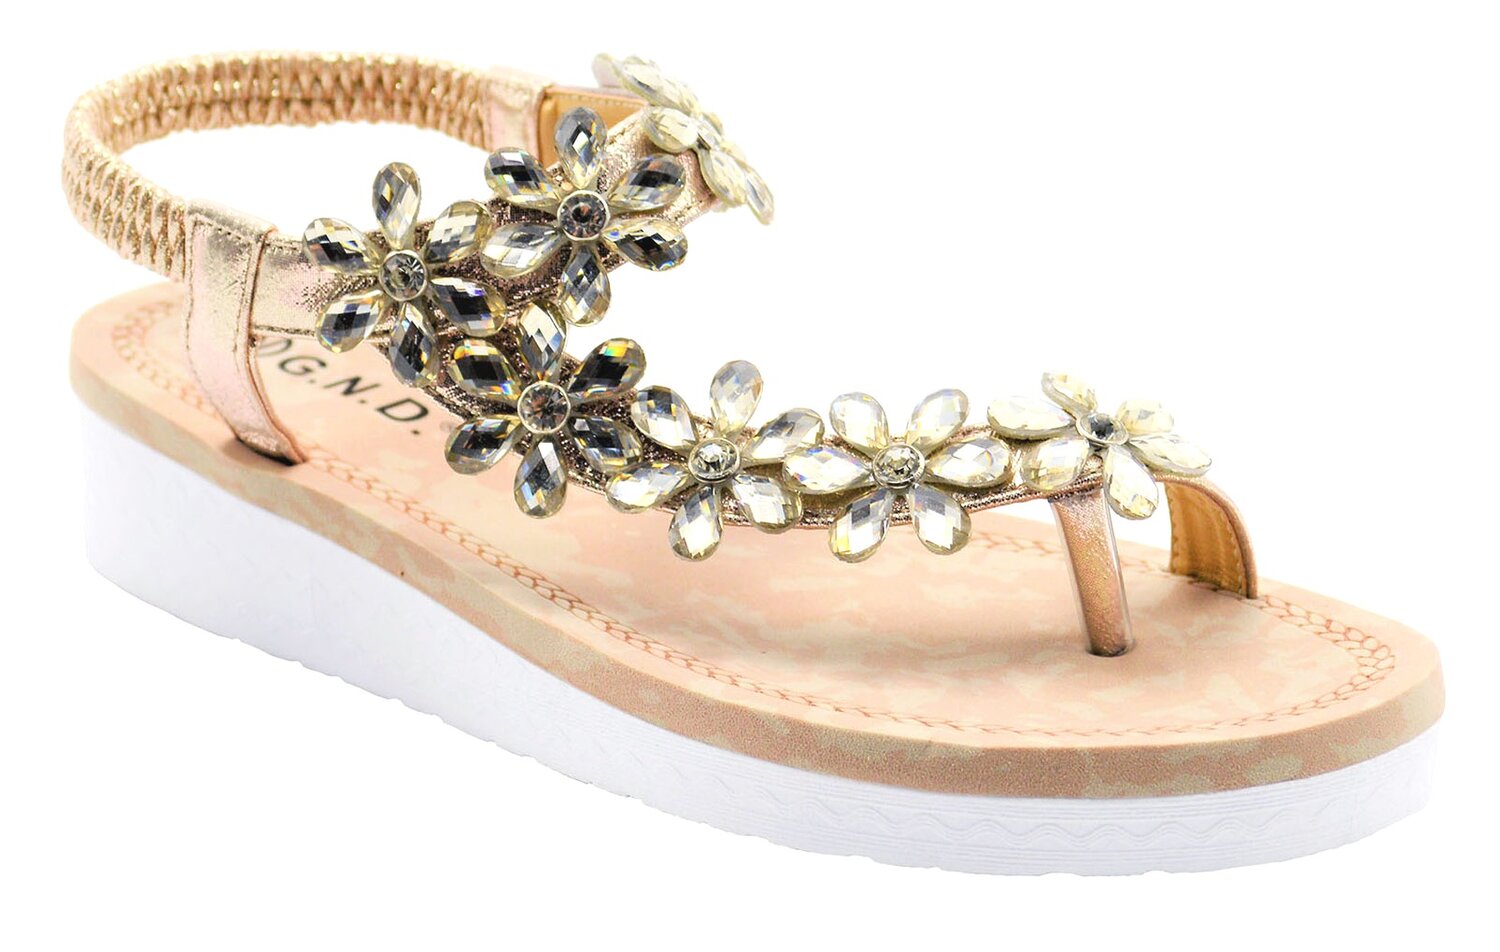 Wholesale Women's Sandals Wedge Thong Ankle Strap Ladies Flat Kehlani NGj0